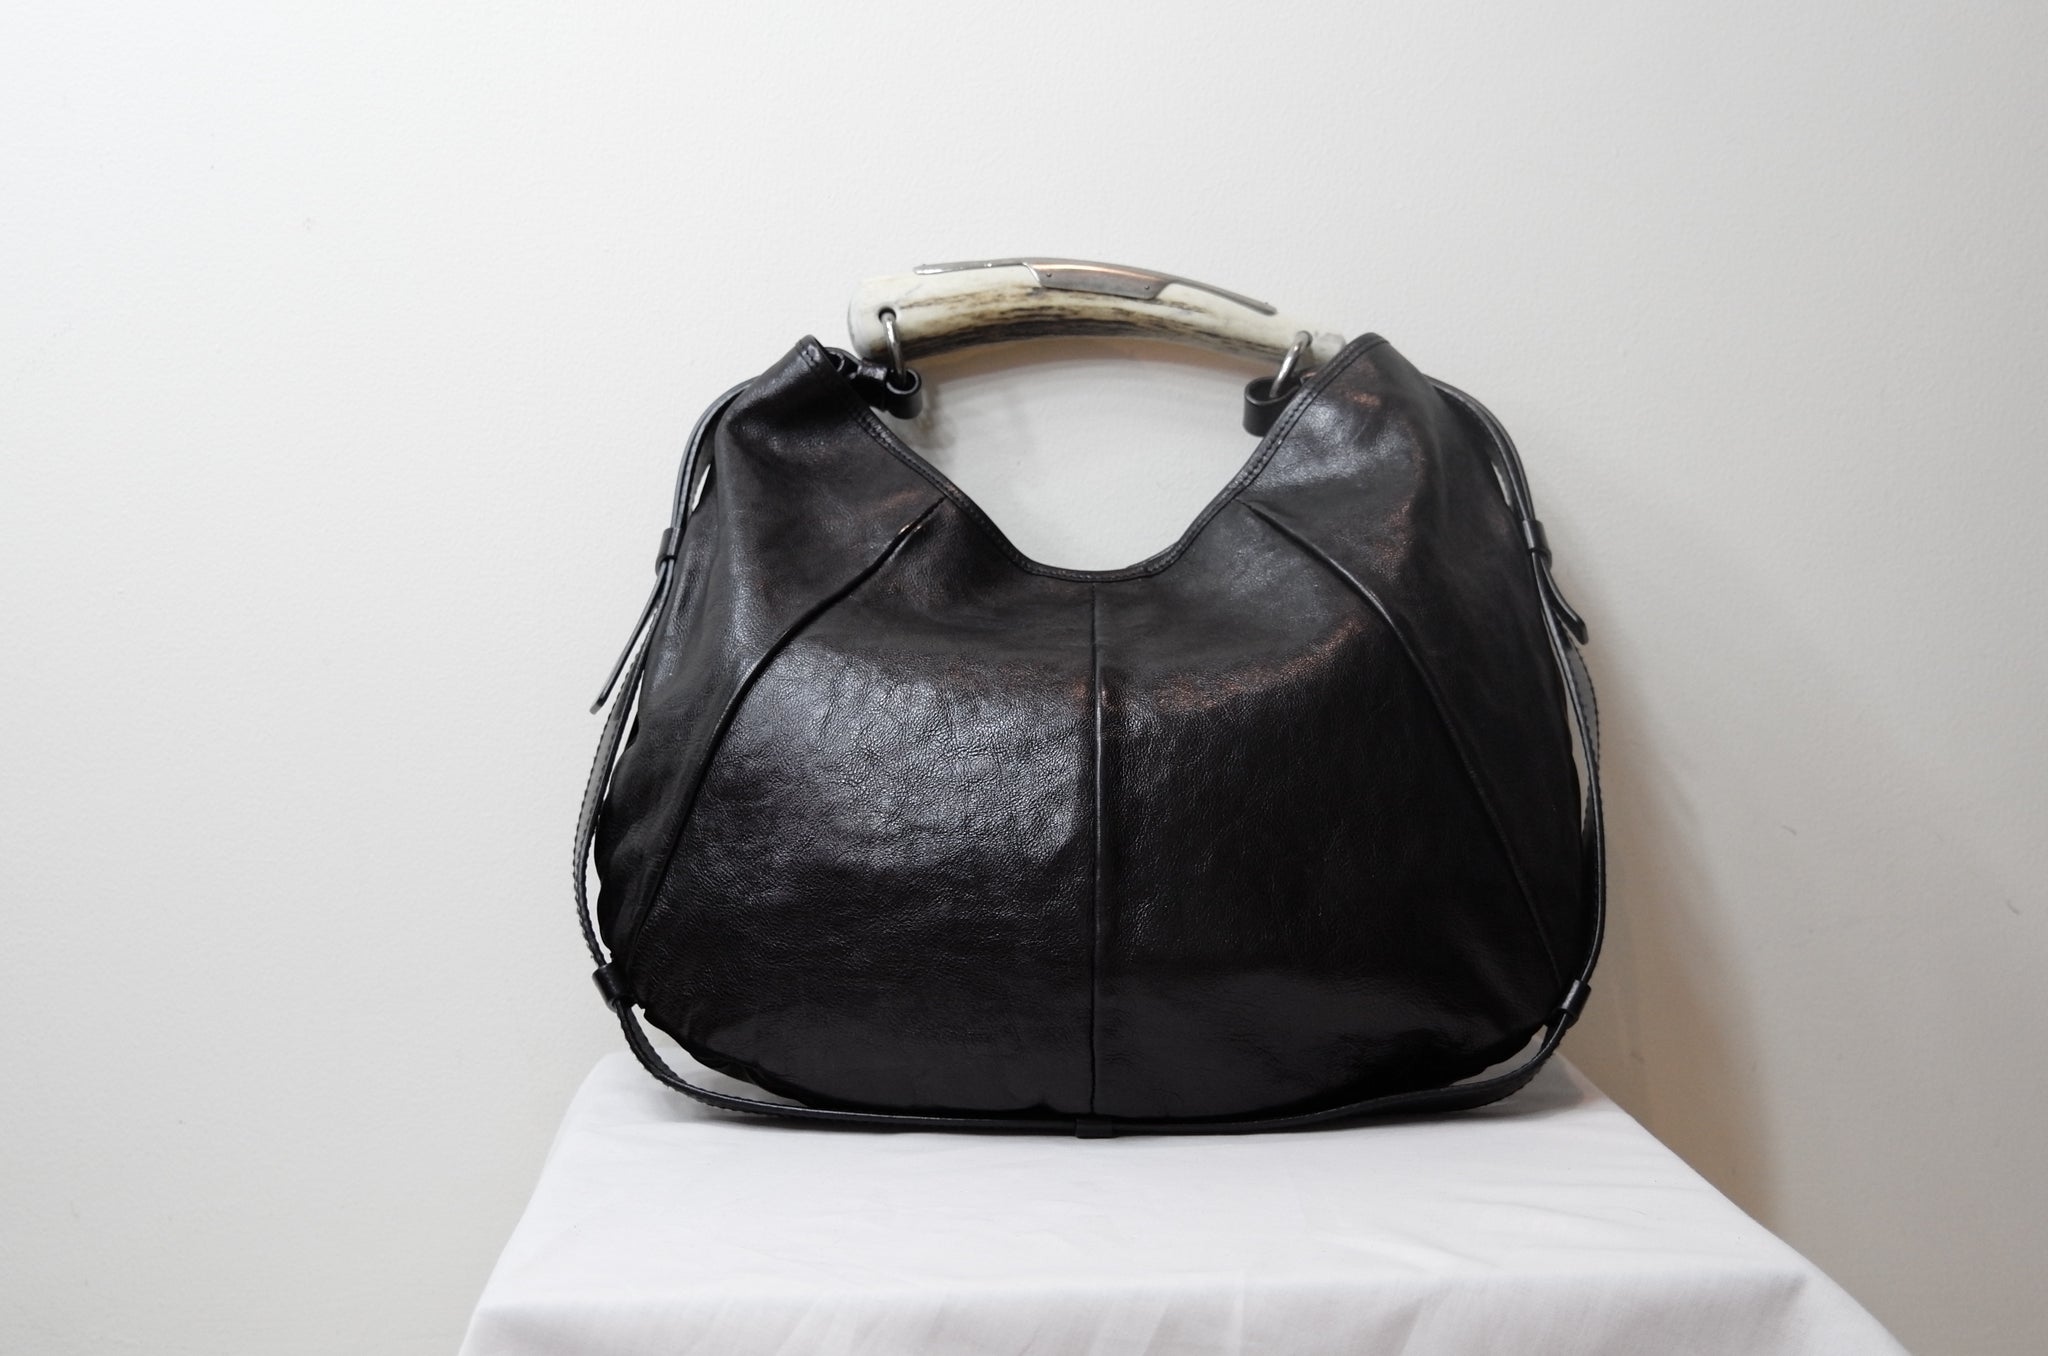 Mombasa leather handbag